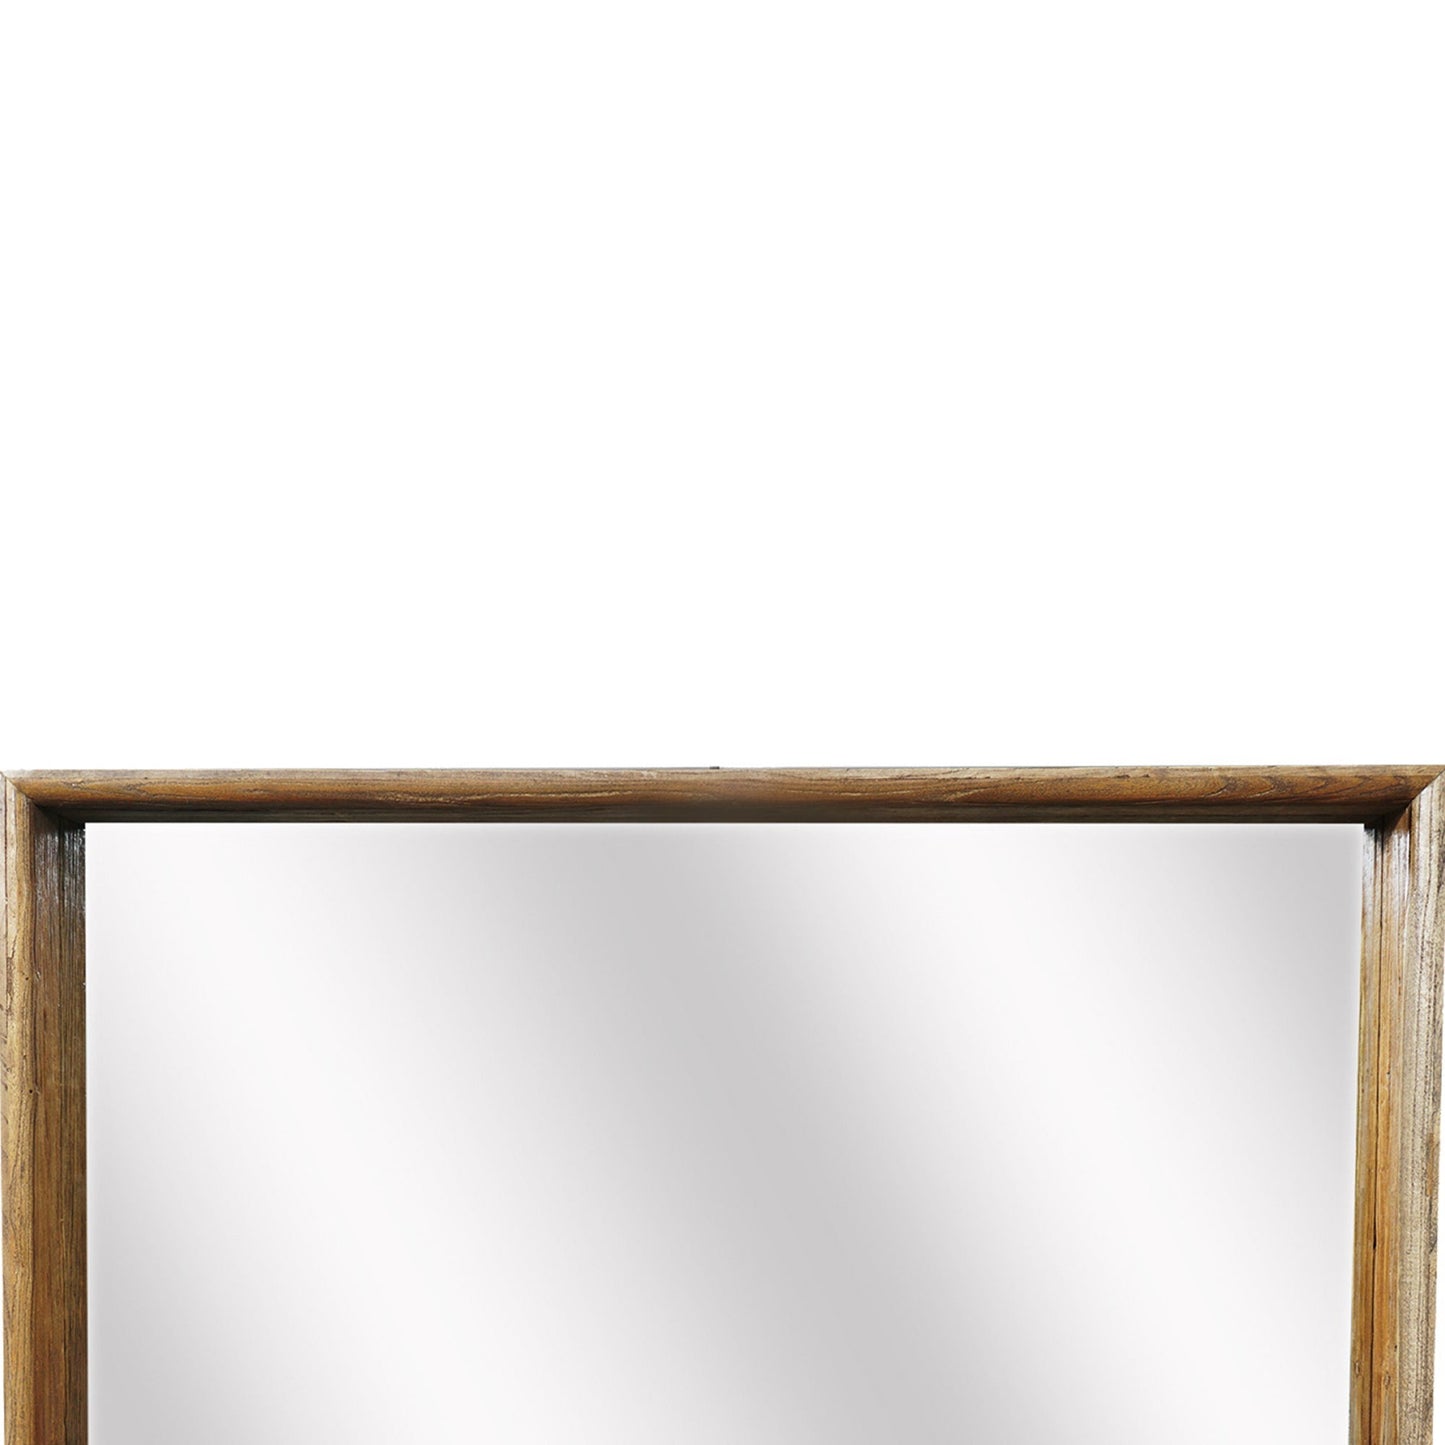 Benzara Brown Rectangular Rustic Style Wooden Wall Mirror